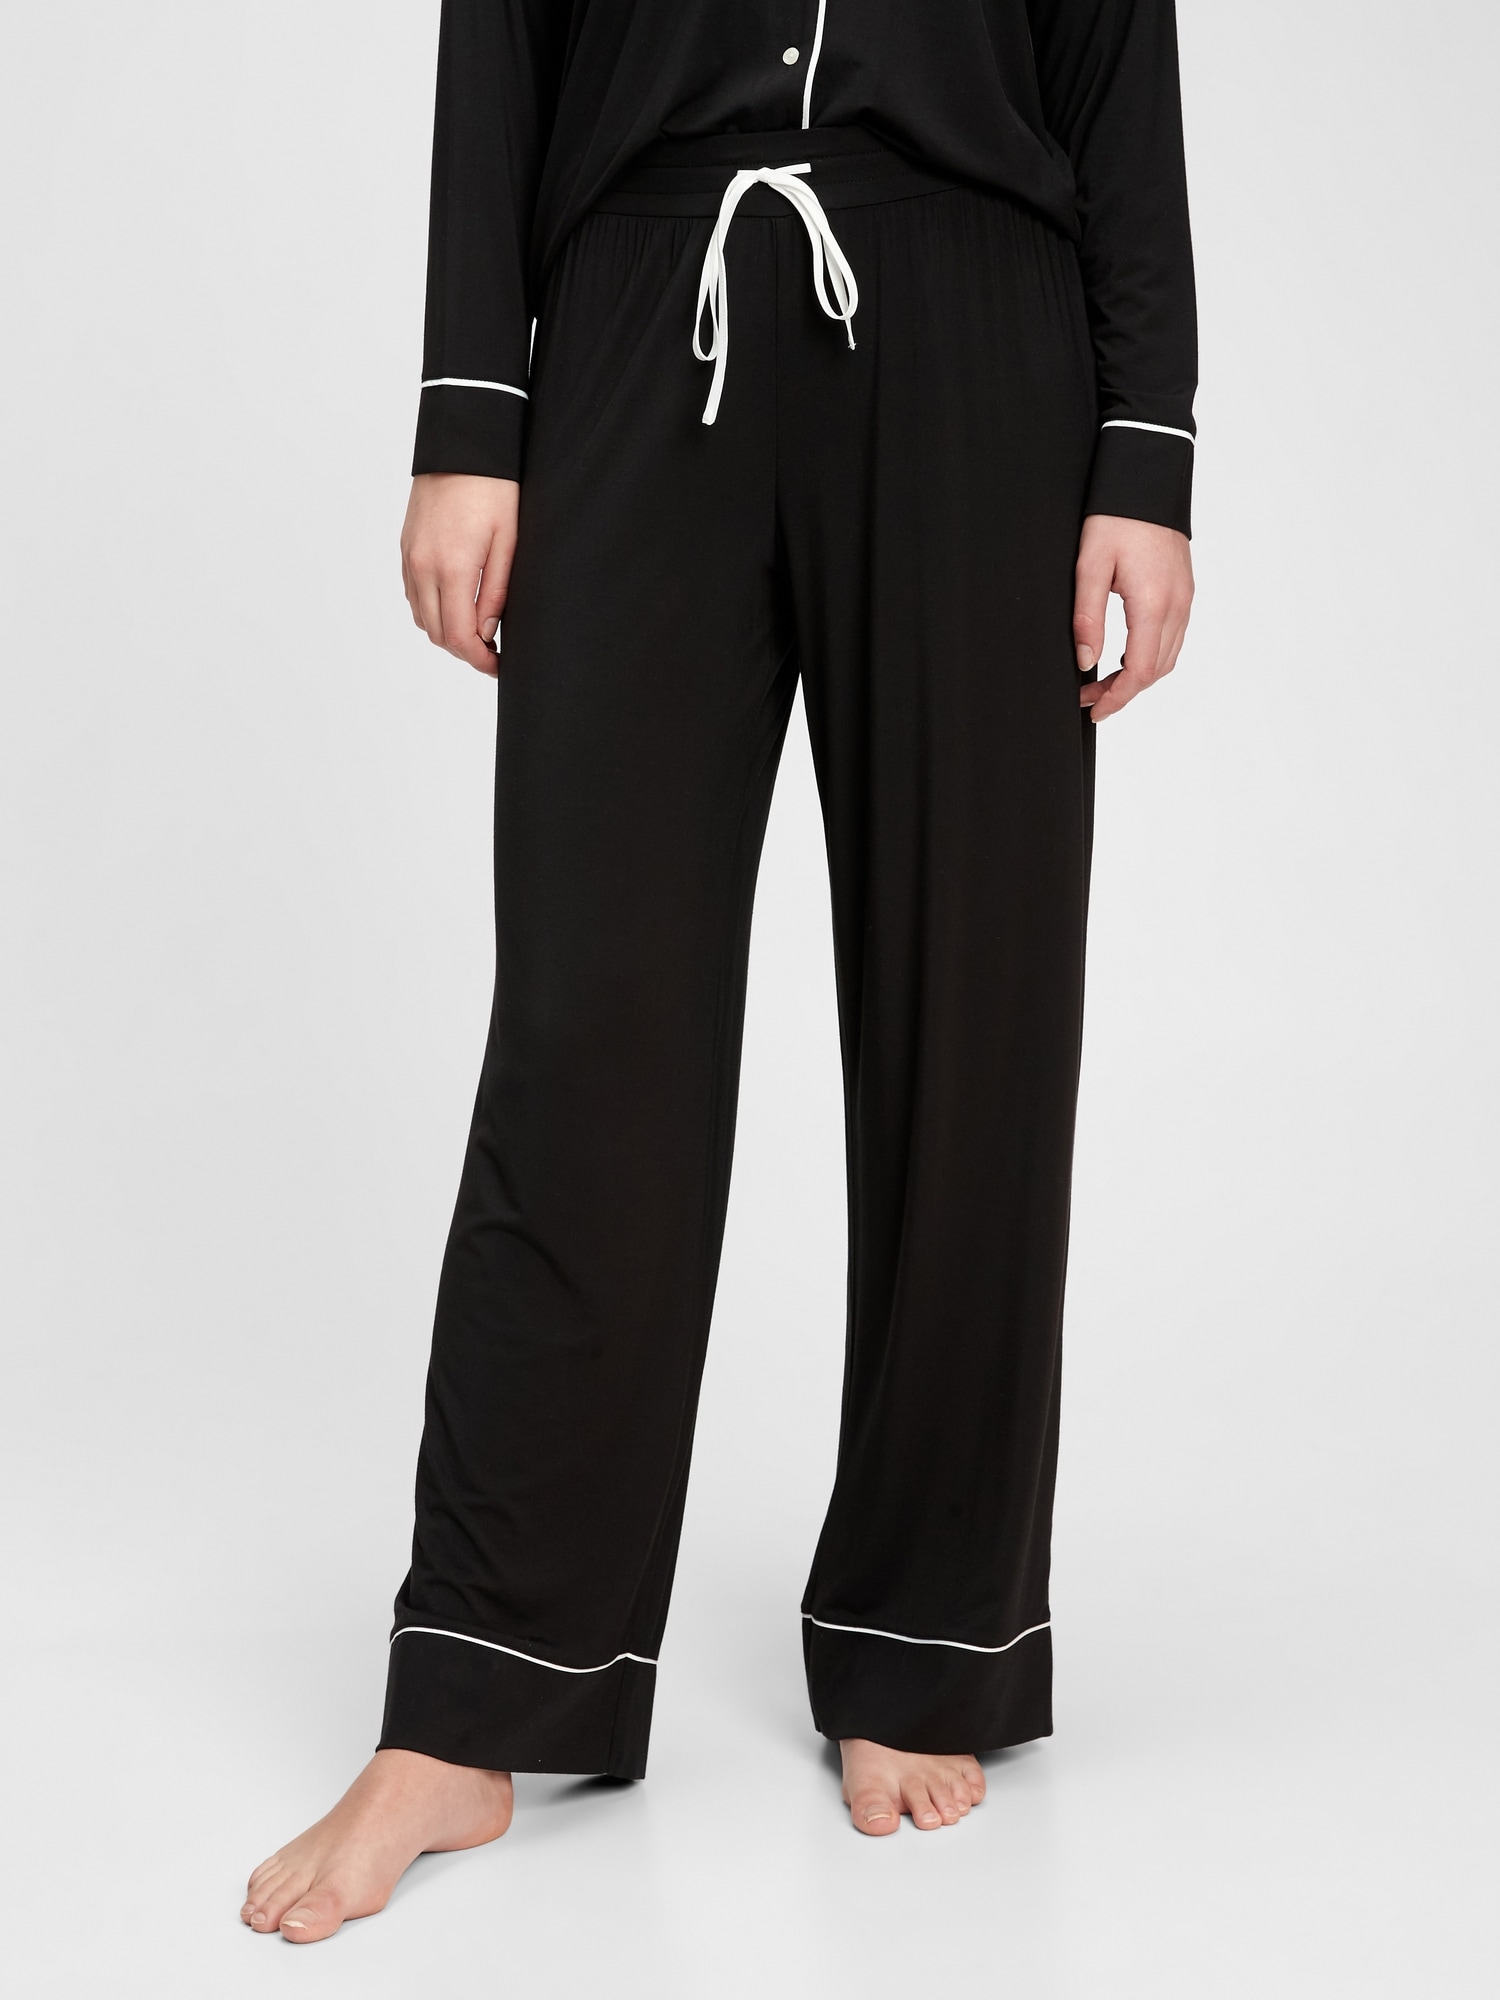 me Women's Modal Blend Pyjama Set - Black